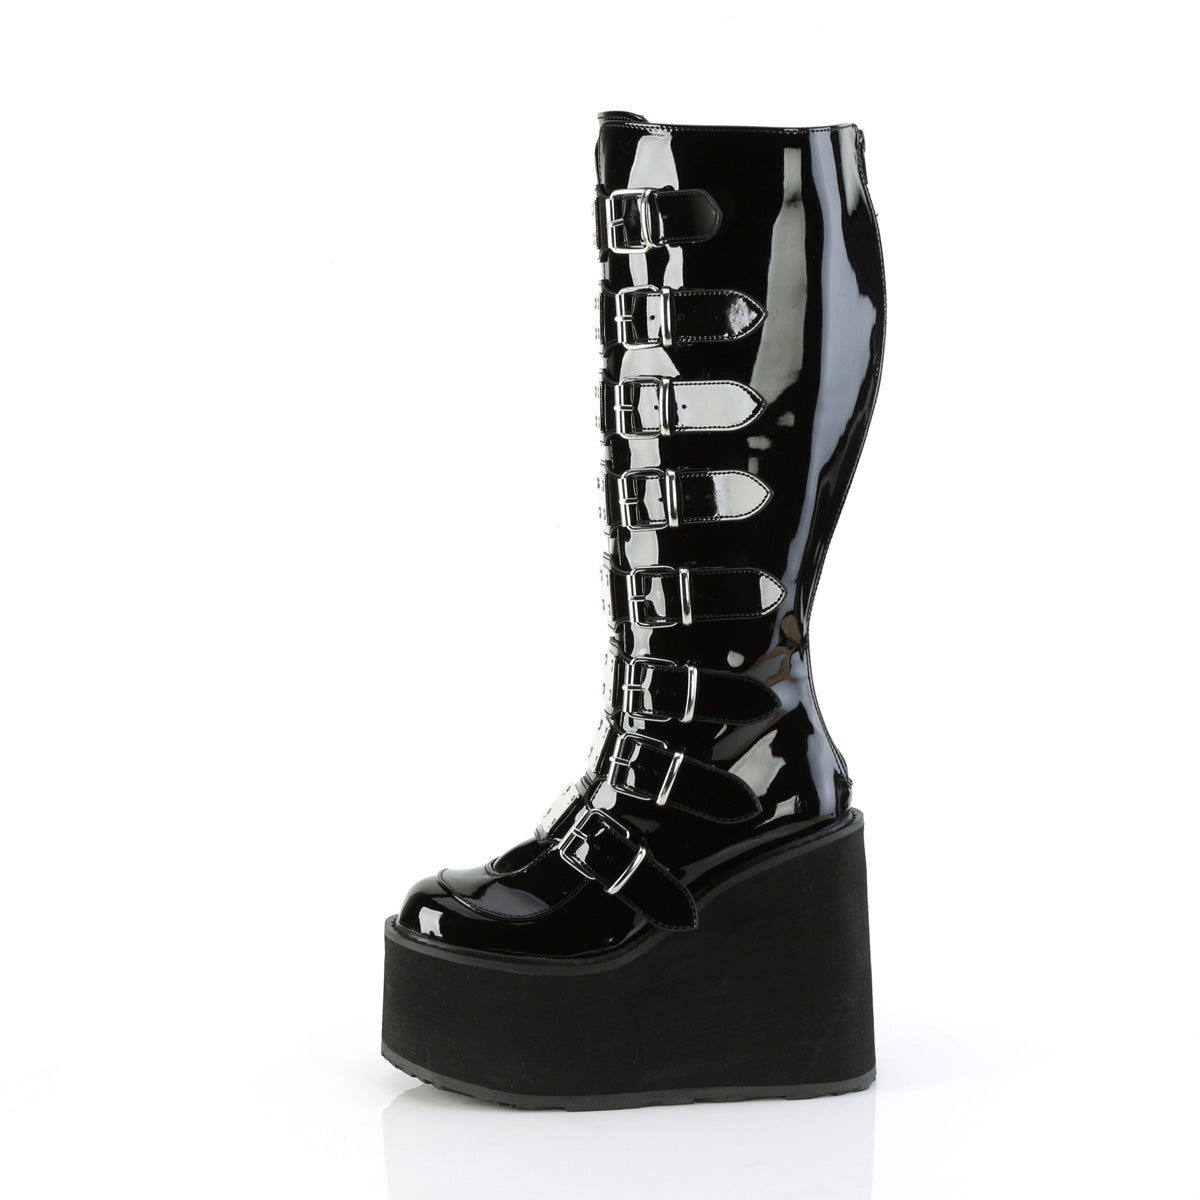 SWING-815WC Demonia Black Patent Women's Mid-Calf & Knee High Boots [Demonia Cult Alternative Footwear]